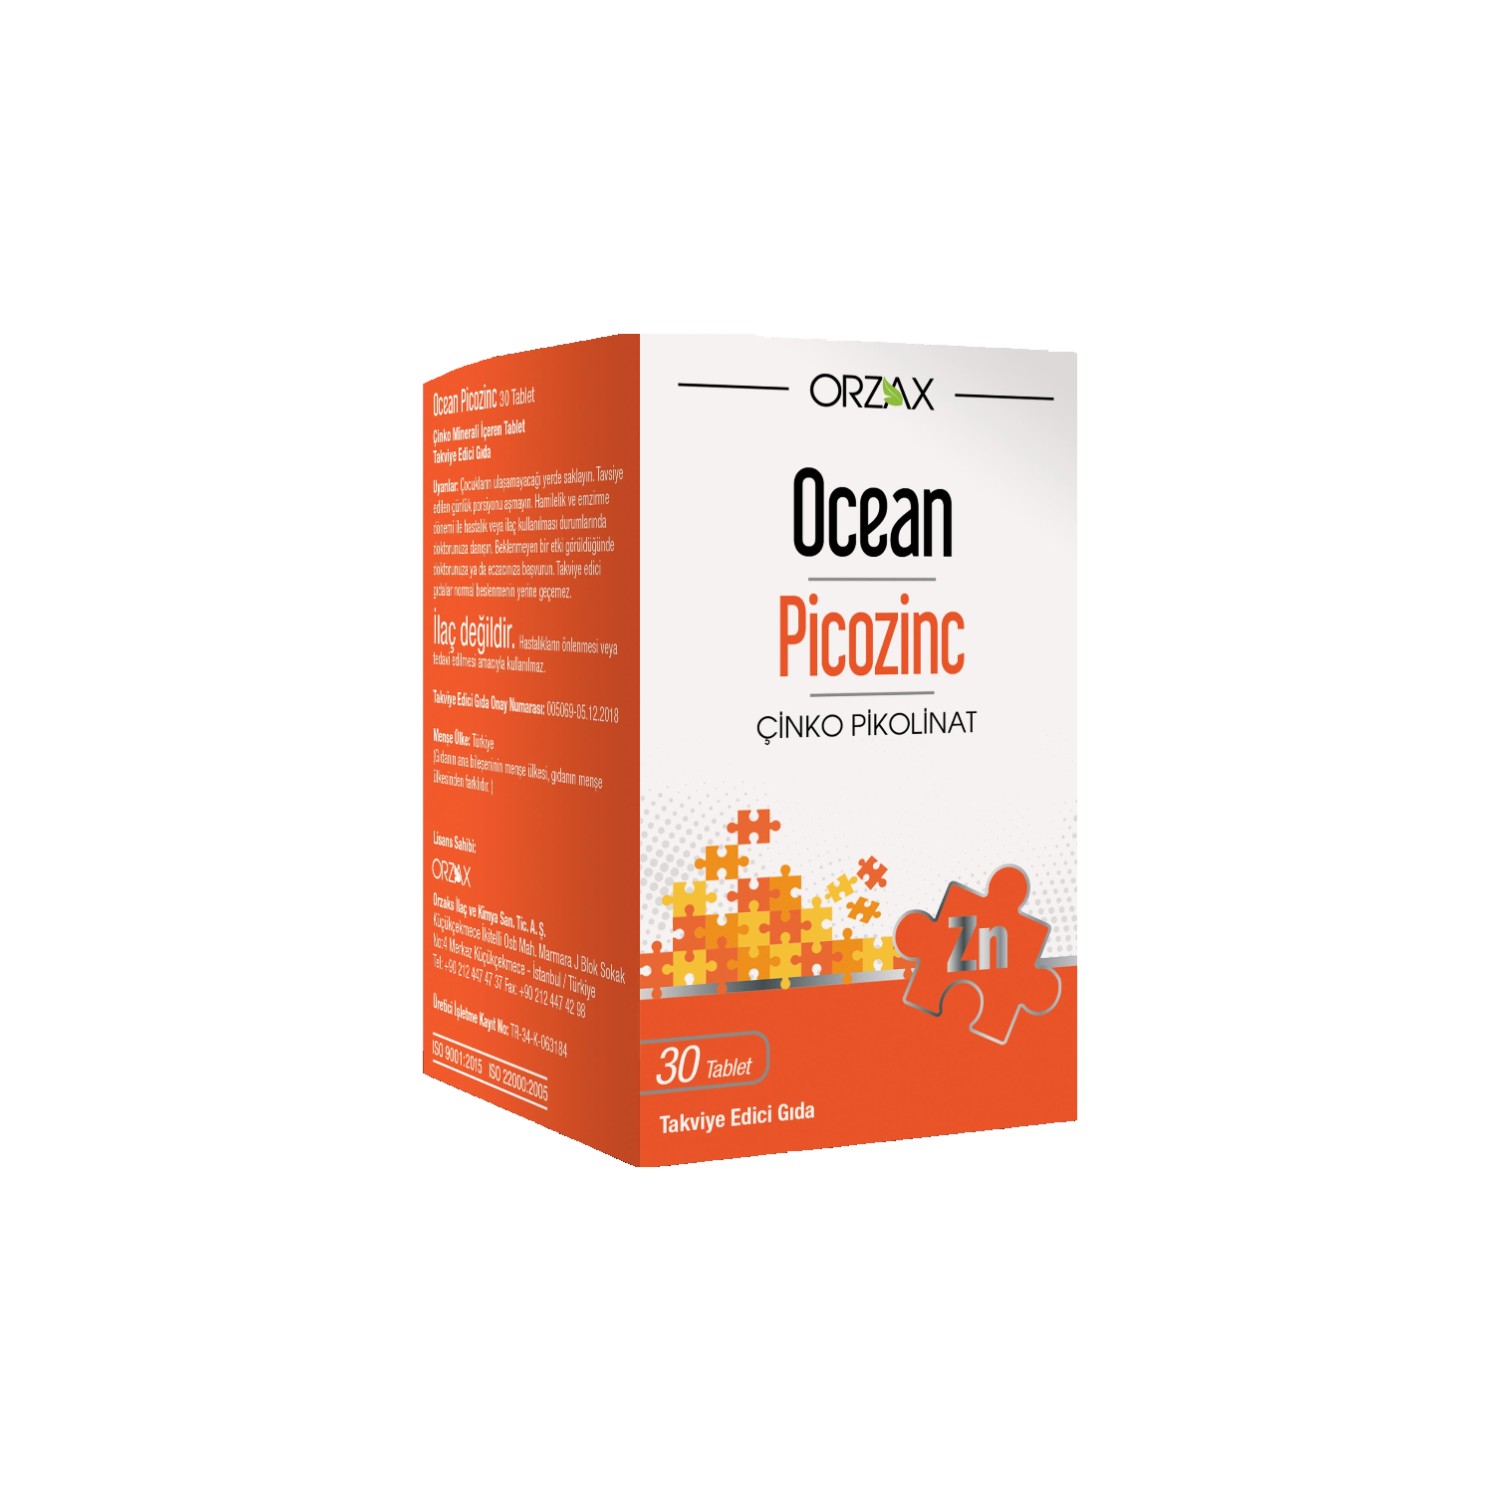 пищевая добавка orzax ocean picozinc supplementary food 3 упаковки по 30 капсул Пищевая добавка Orzax Ocean Picozinc Supplementary Food, 4 упаковки по 30 капсул